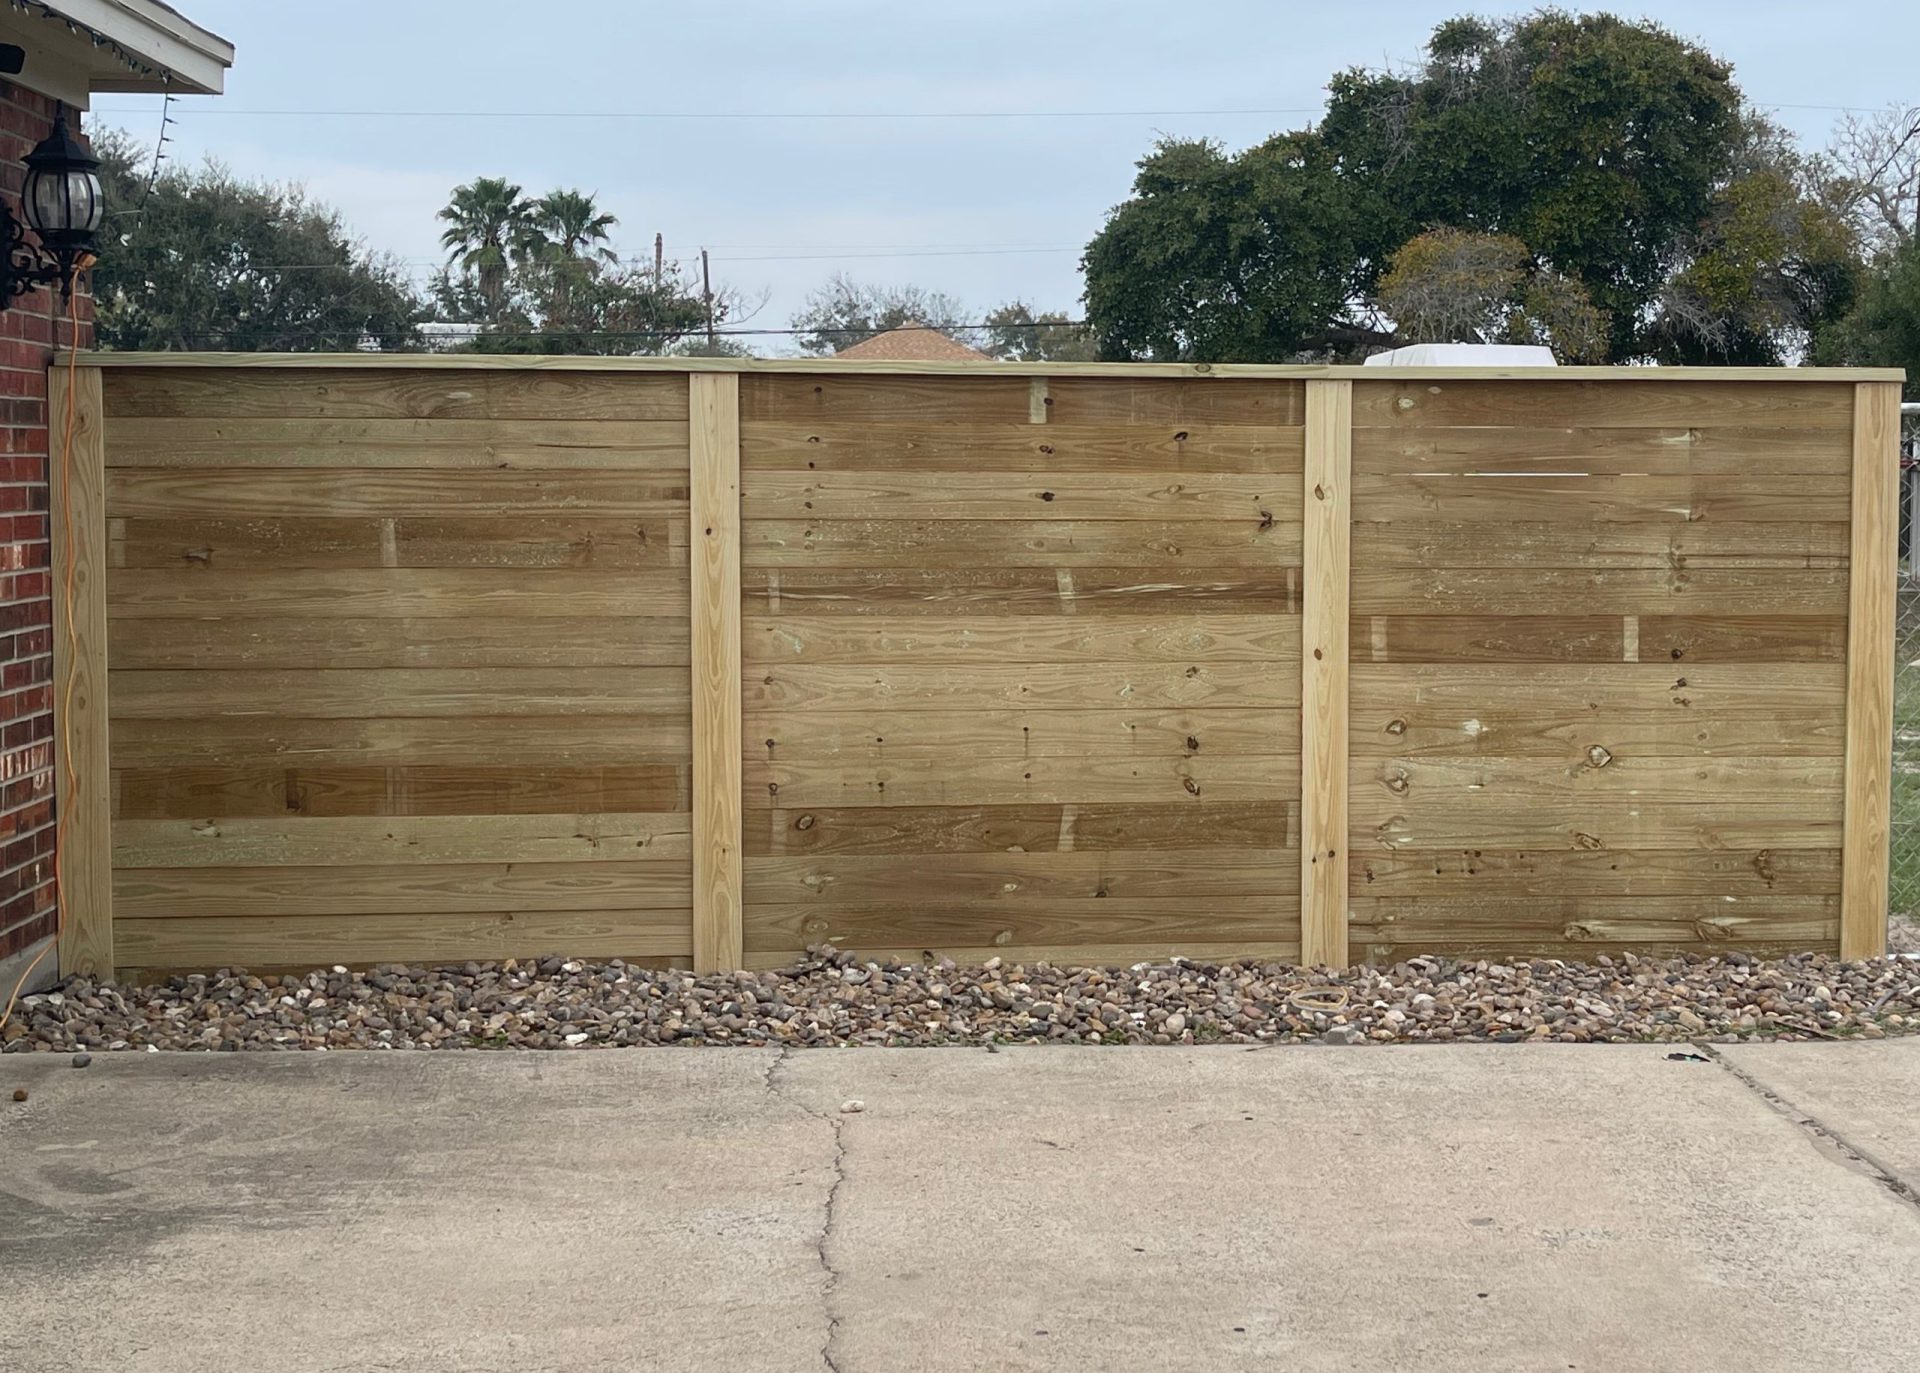 Custom wood fence by D&C Fence Co in Corpus Christi, Tx.